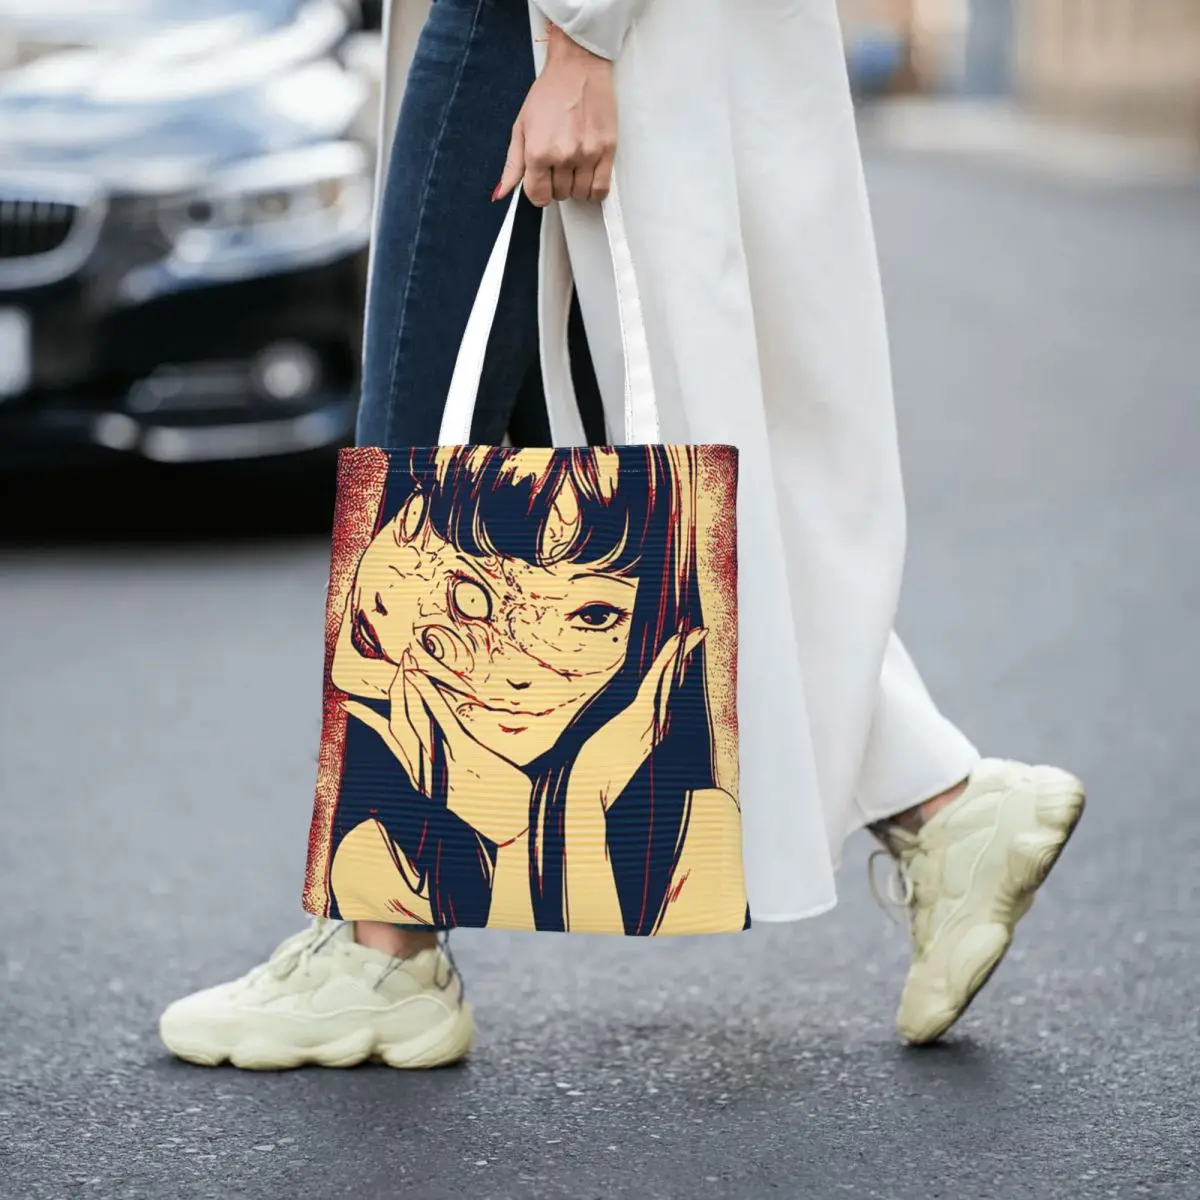 Vintage Art Japanese Horror Manga Tomie Ito Junji Totes Canvas Handbag Women Canvas Shopping Bag